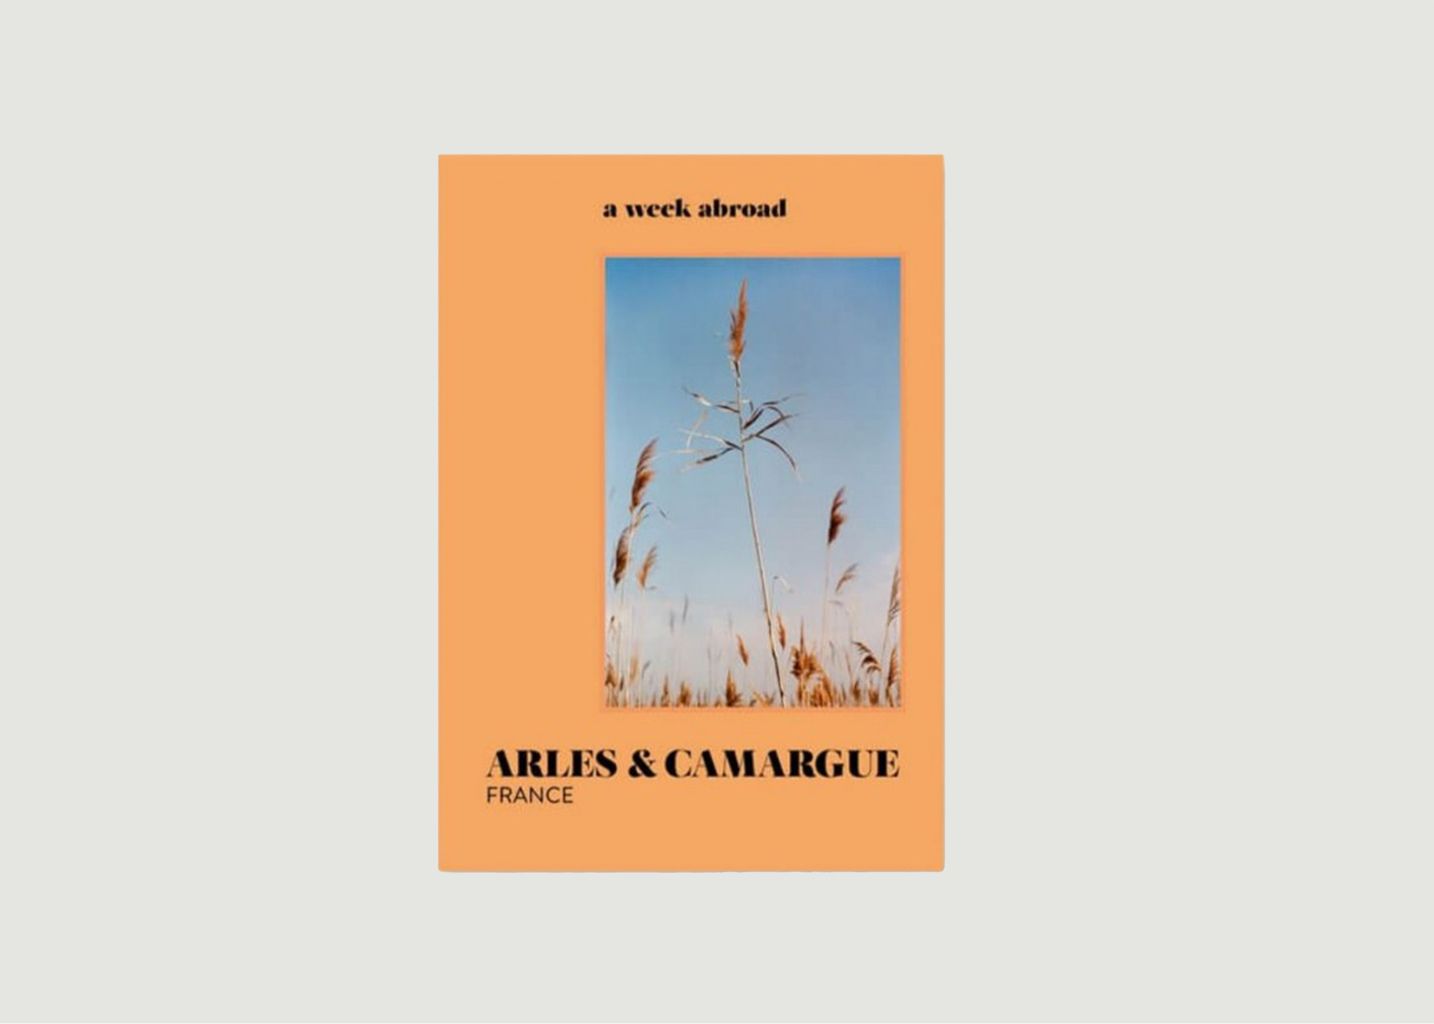 Book A Week Abroad Arles & Camargue - A week abroad